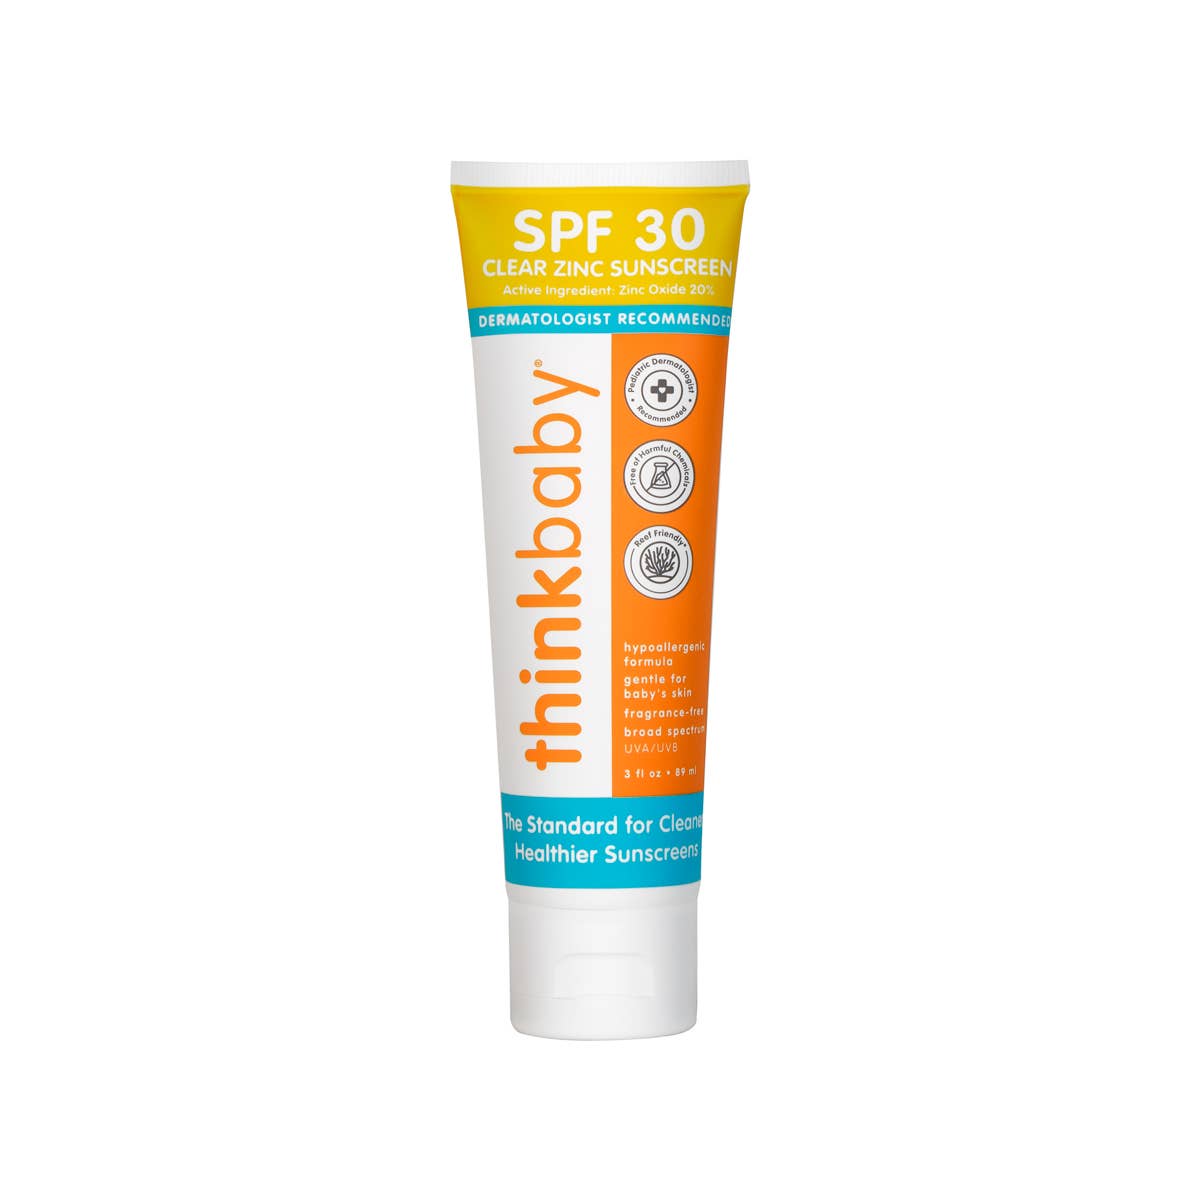 Thinkbaby Clear Zinc Sunscreen SPF 30, 3 fl oz